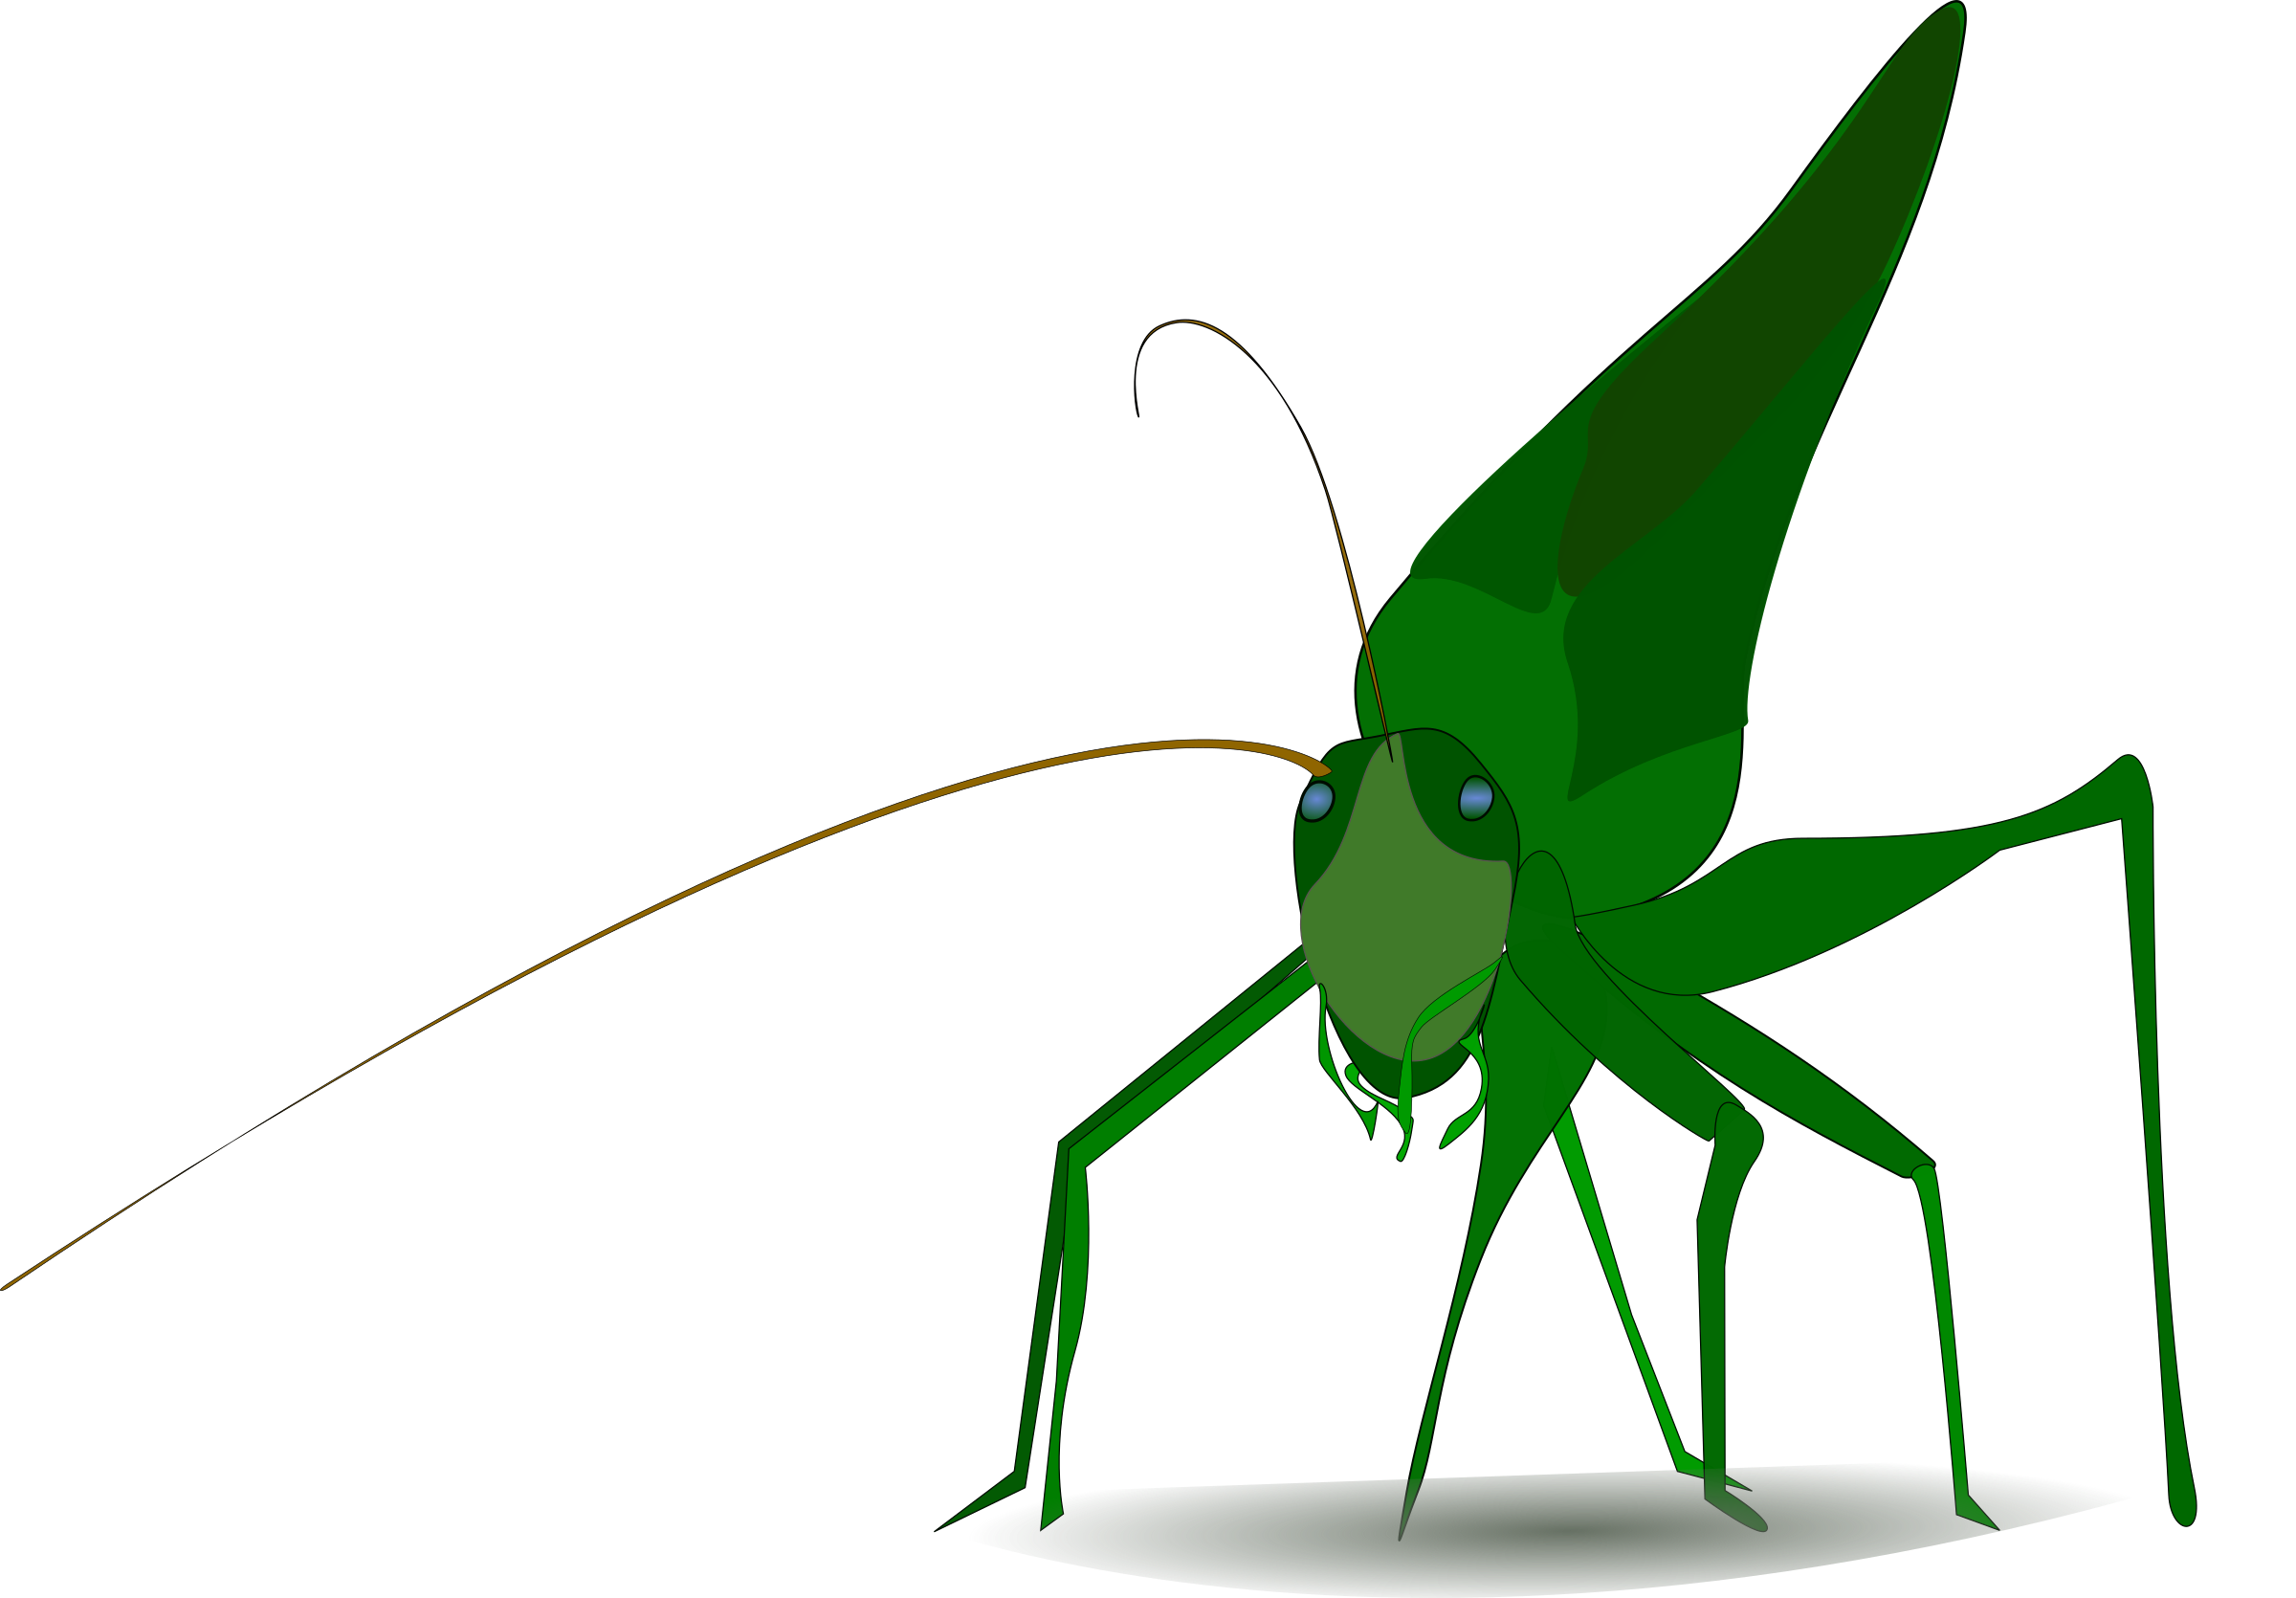 Big image png. Grasshopper clipart small